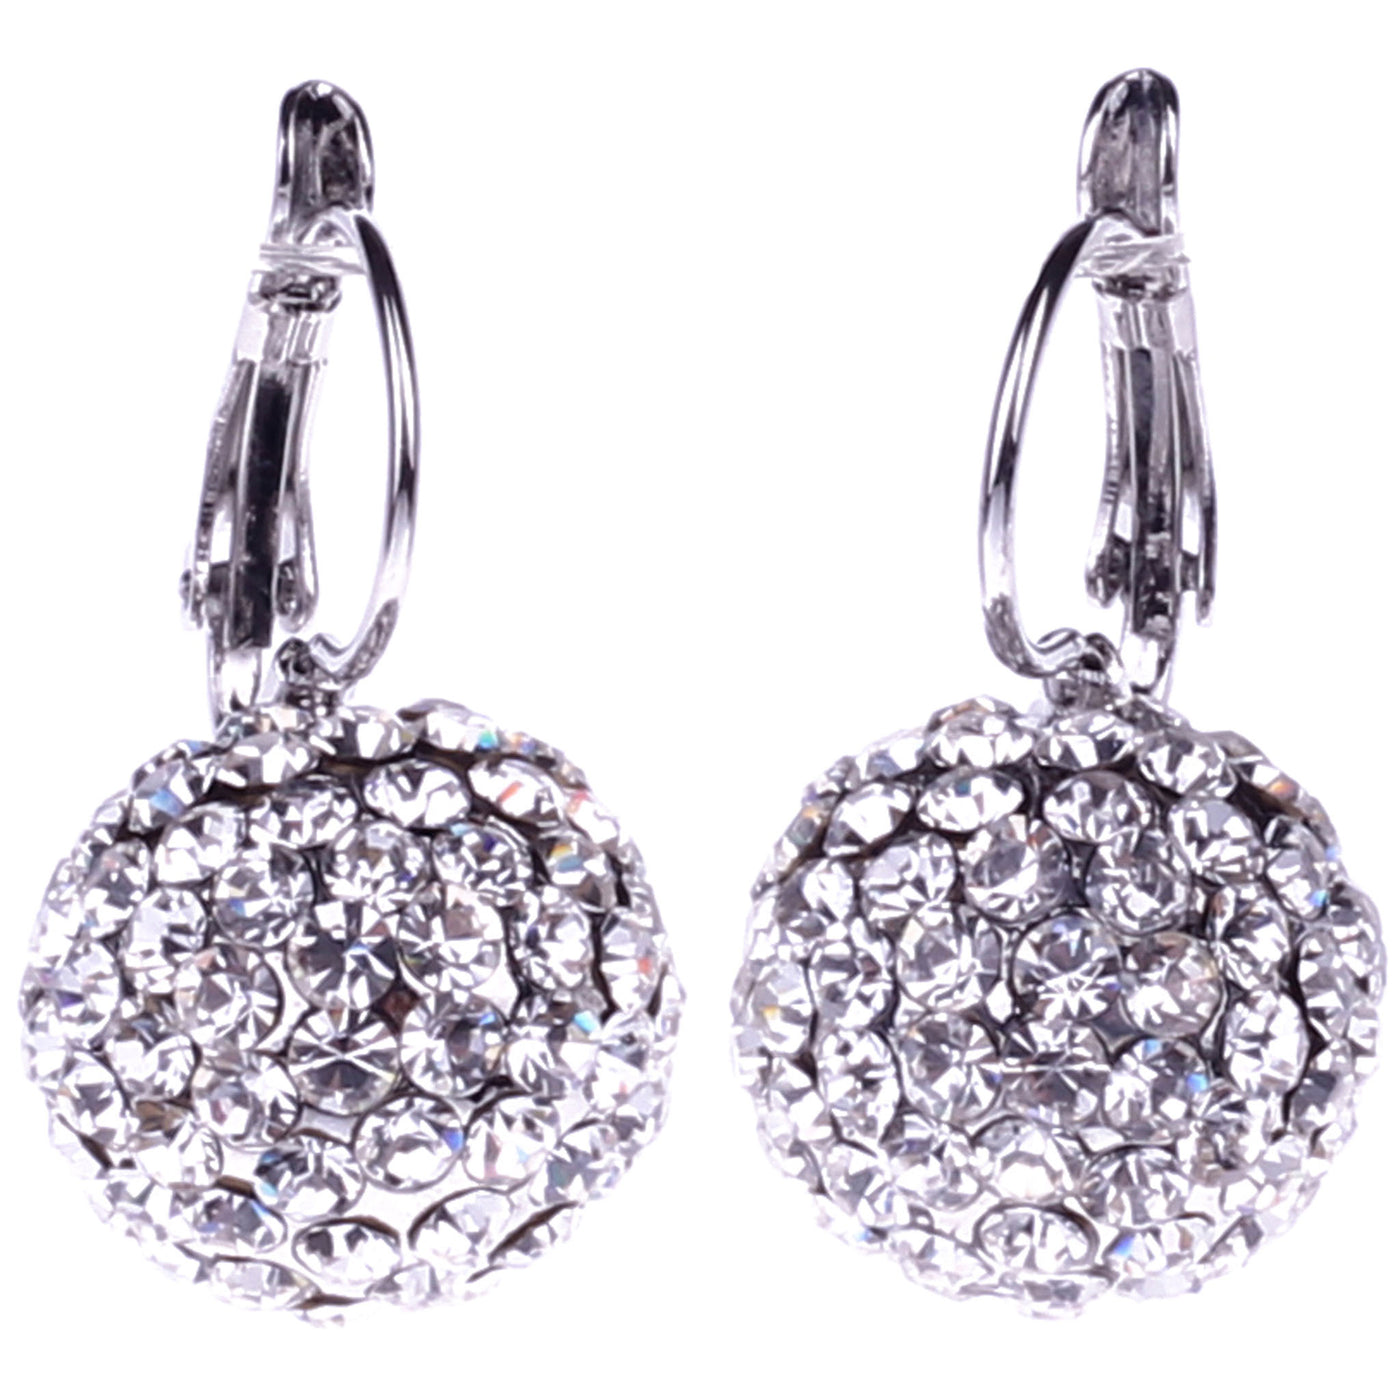 Rhinestone earrings